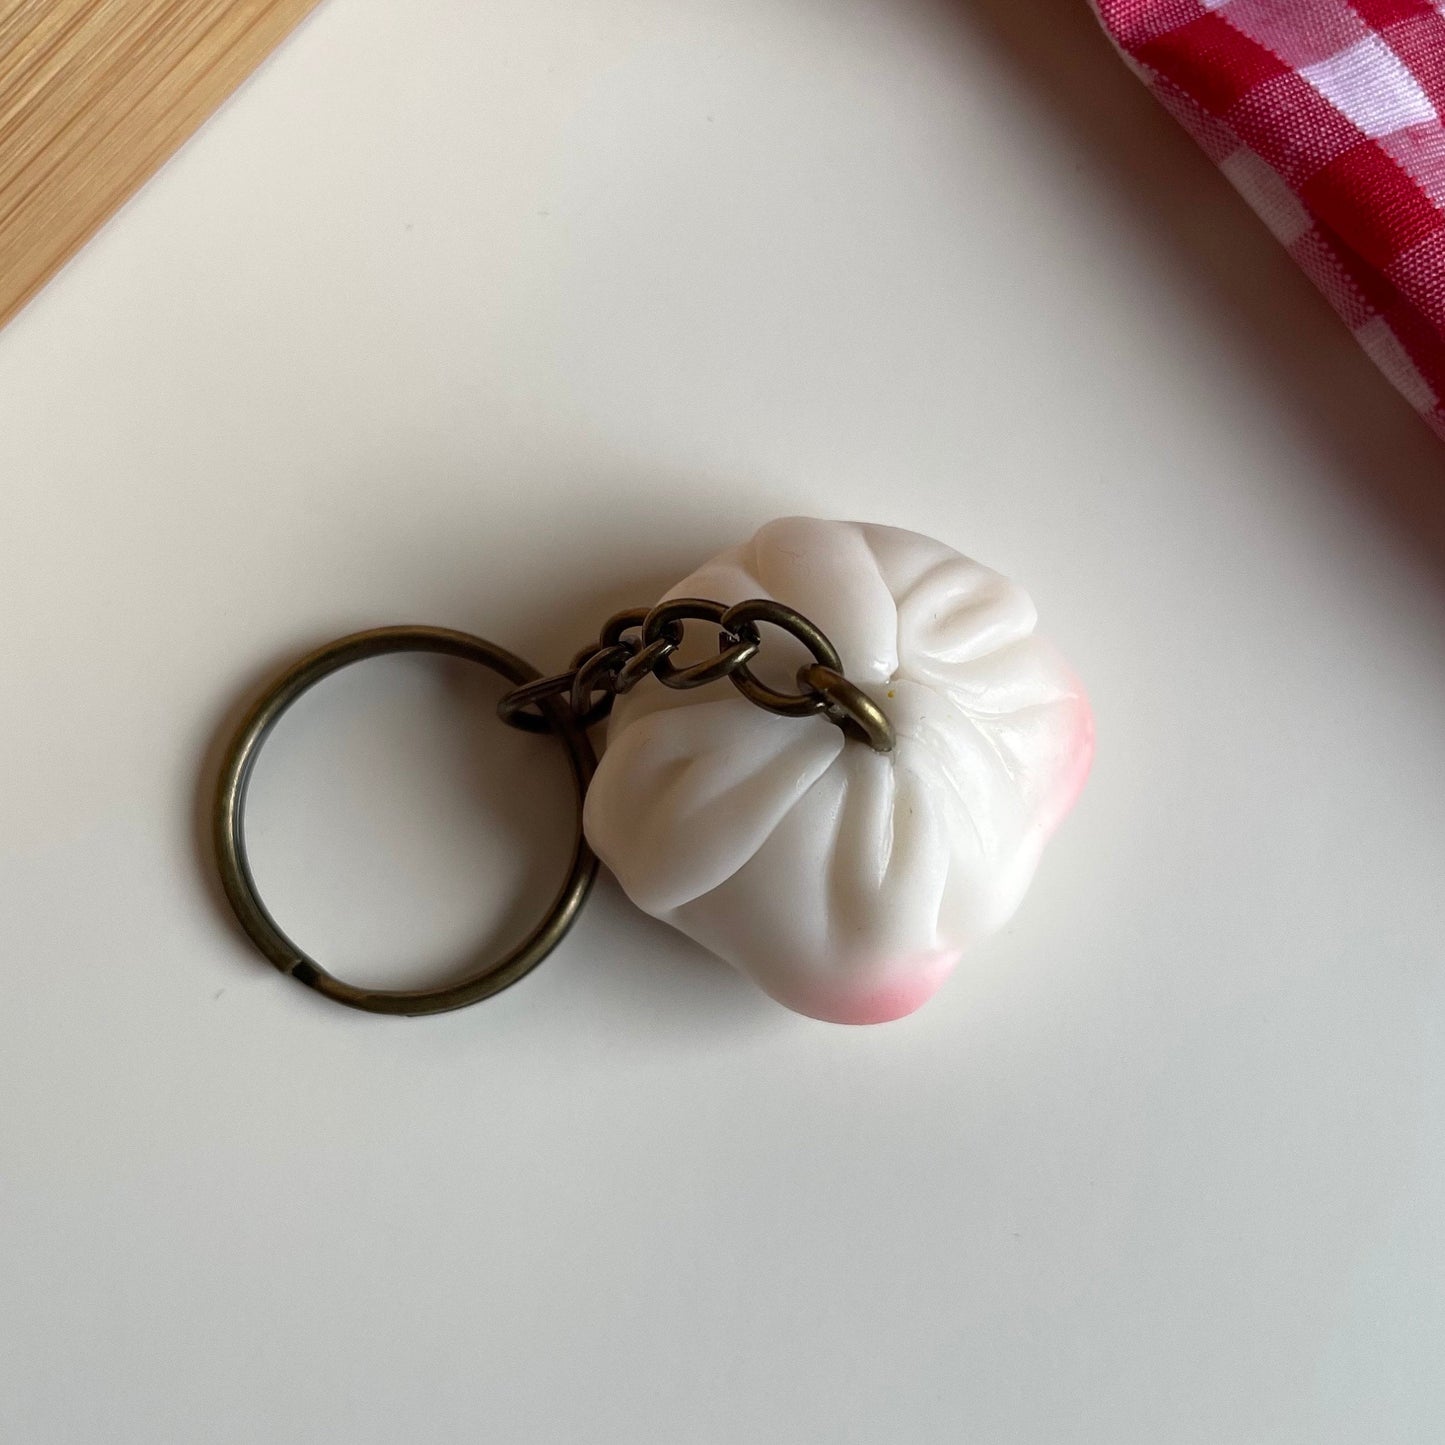 Cute dumpling keychain, bao charm, dumpling keyring, cute novelty keychain, polymerclay charm, clay keyring, realistic food, miniature food